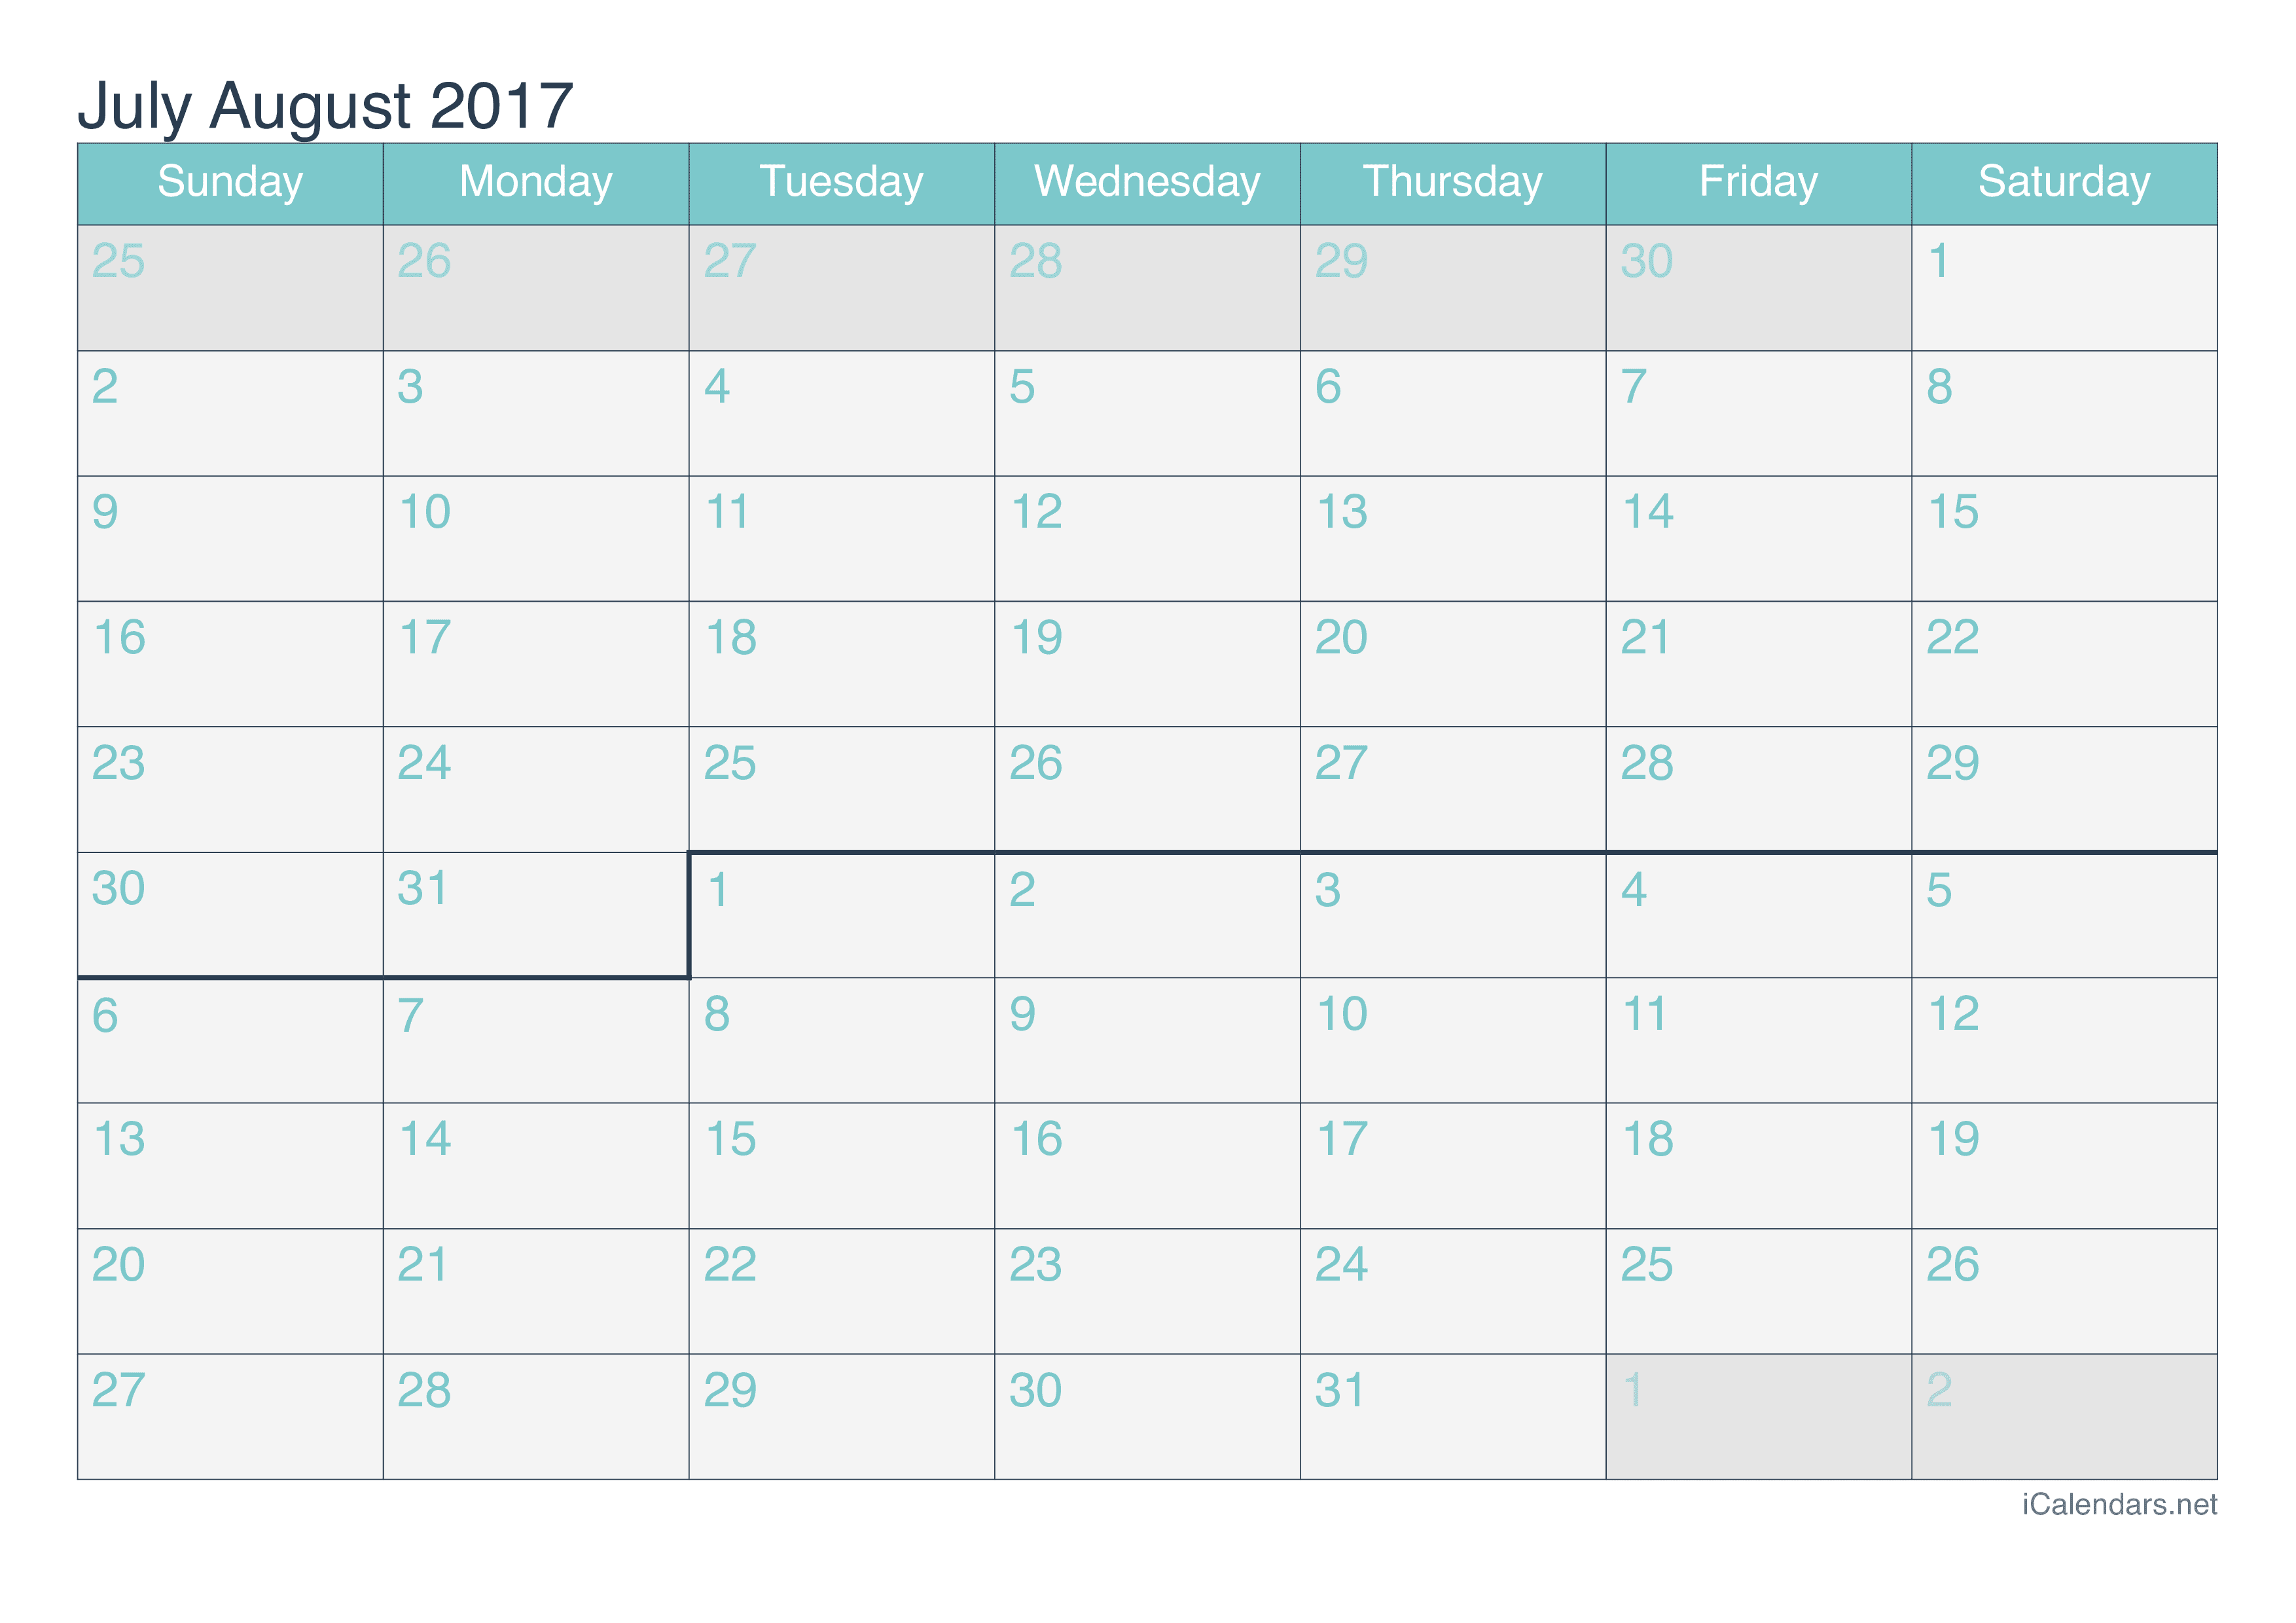 July and August 2017 Printable Calendar icalendars net